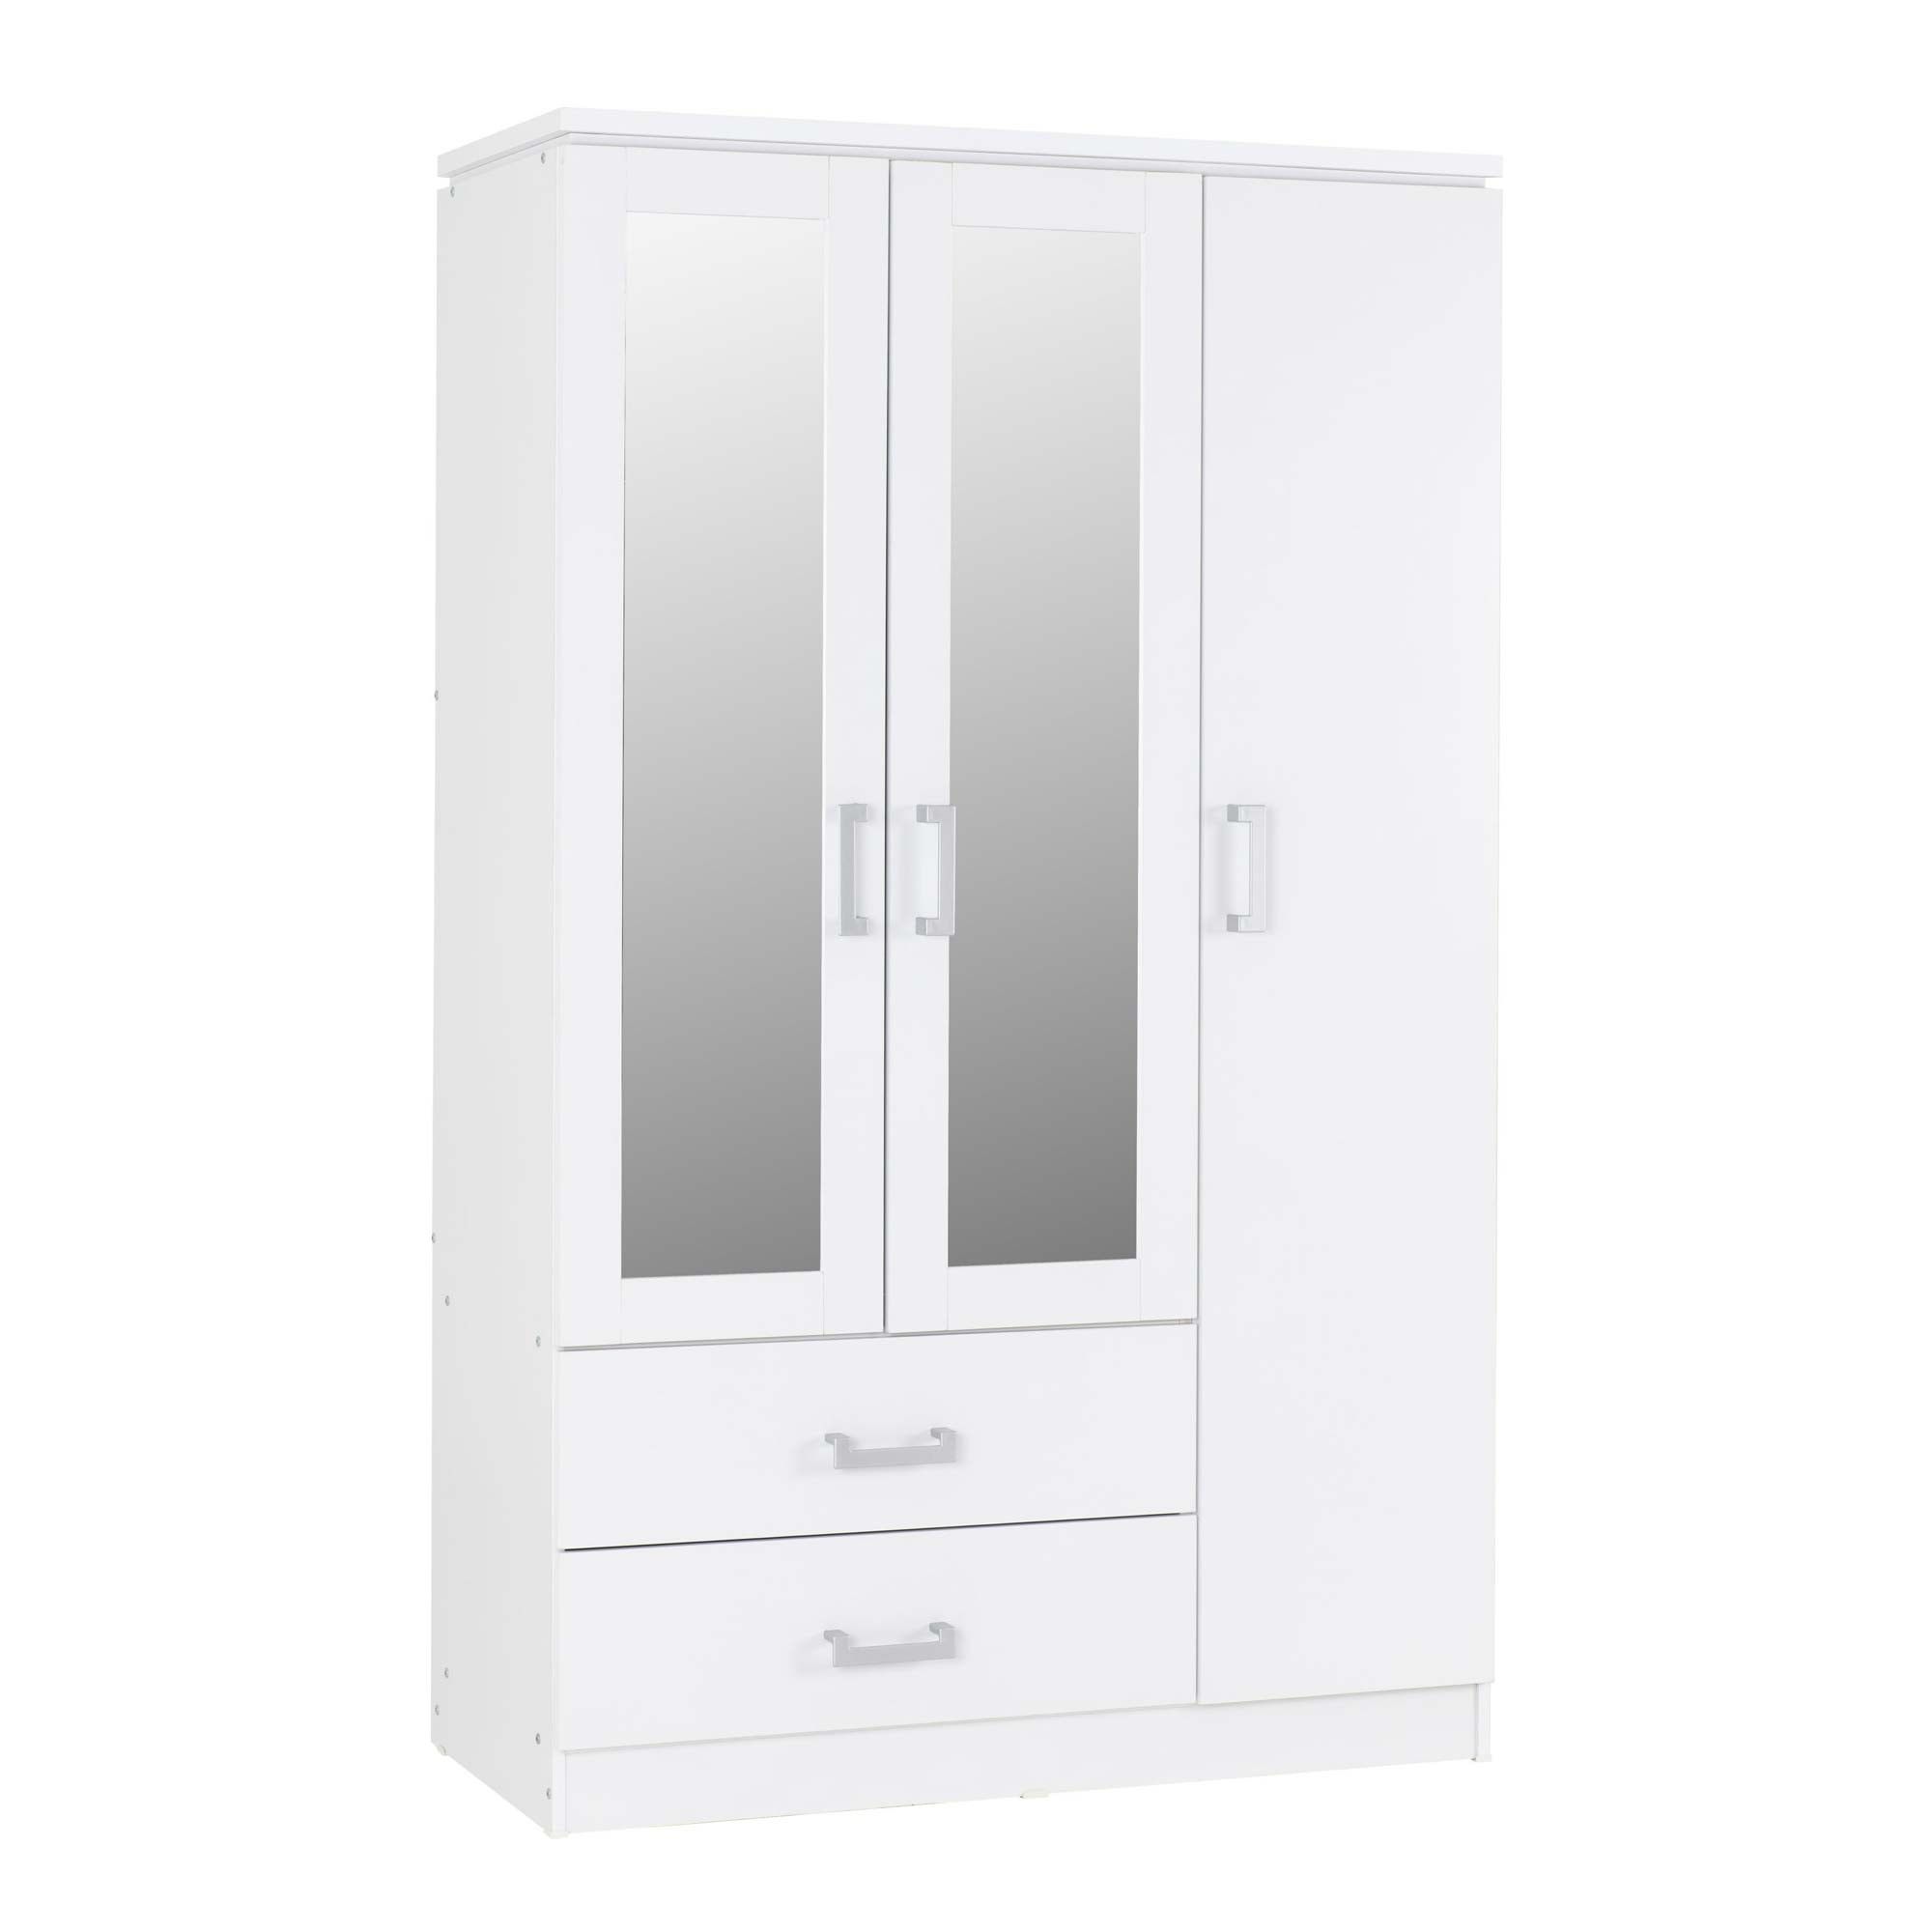 Charles White 3 Door 2 Drawer Wardrobe | Wardrobes | Bedroom Storage Inside 3 Door White Wardrobes With Drawers (View 10 of 15)